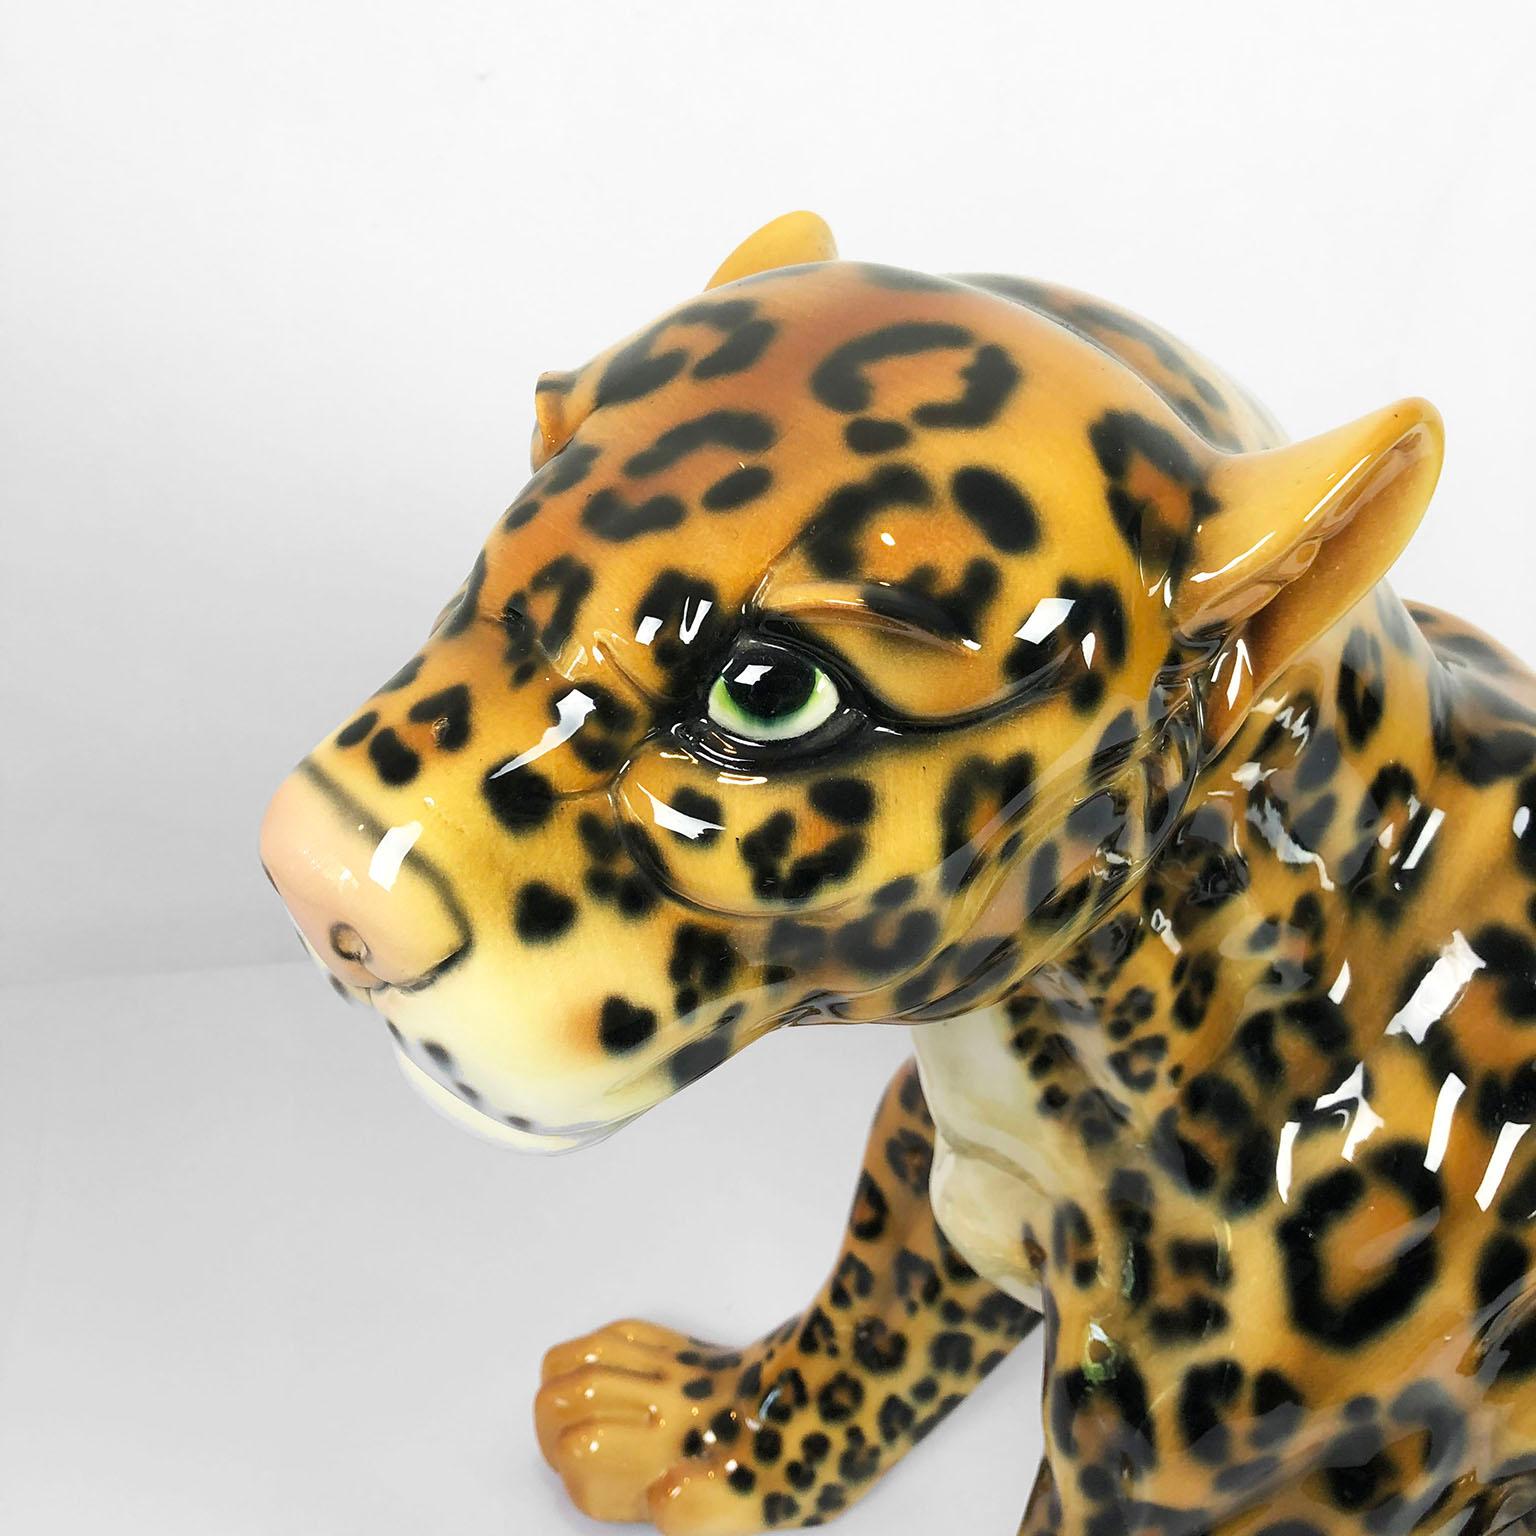 Rare real size jaguar ceramic sculpture by Cerámica de Cuernavaca, circa 1970, Cuernavaca México.
Measures: 104 cm. tall.